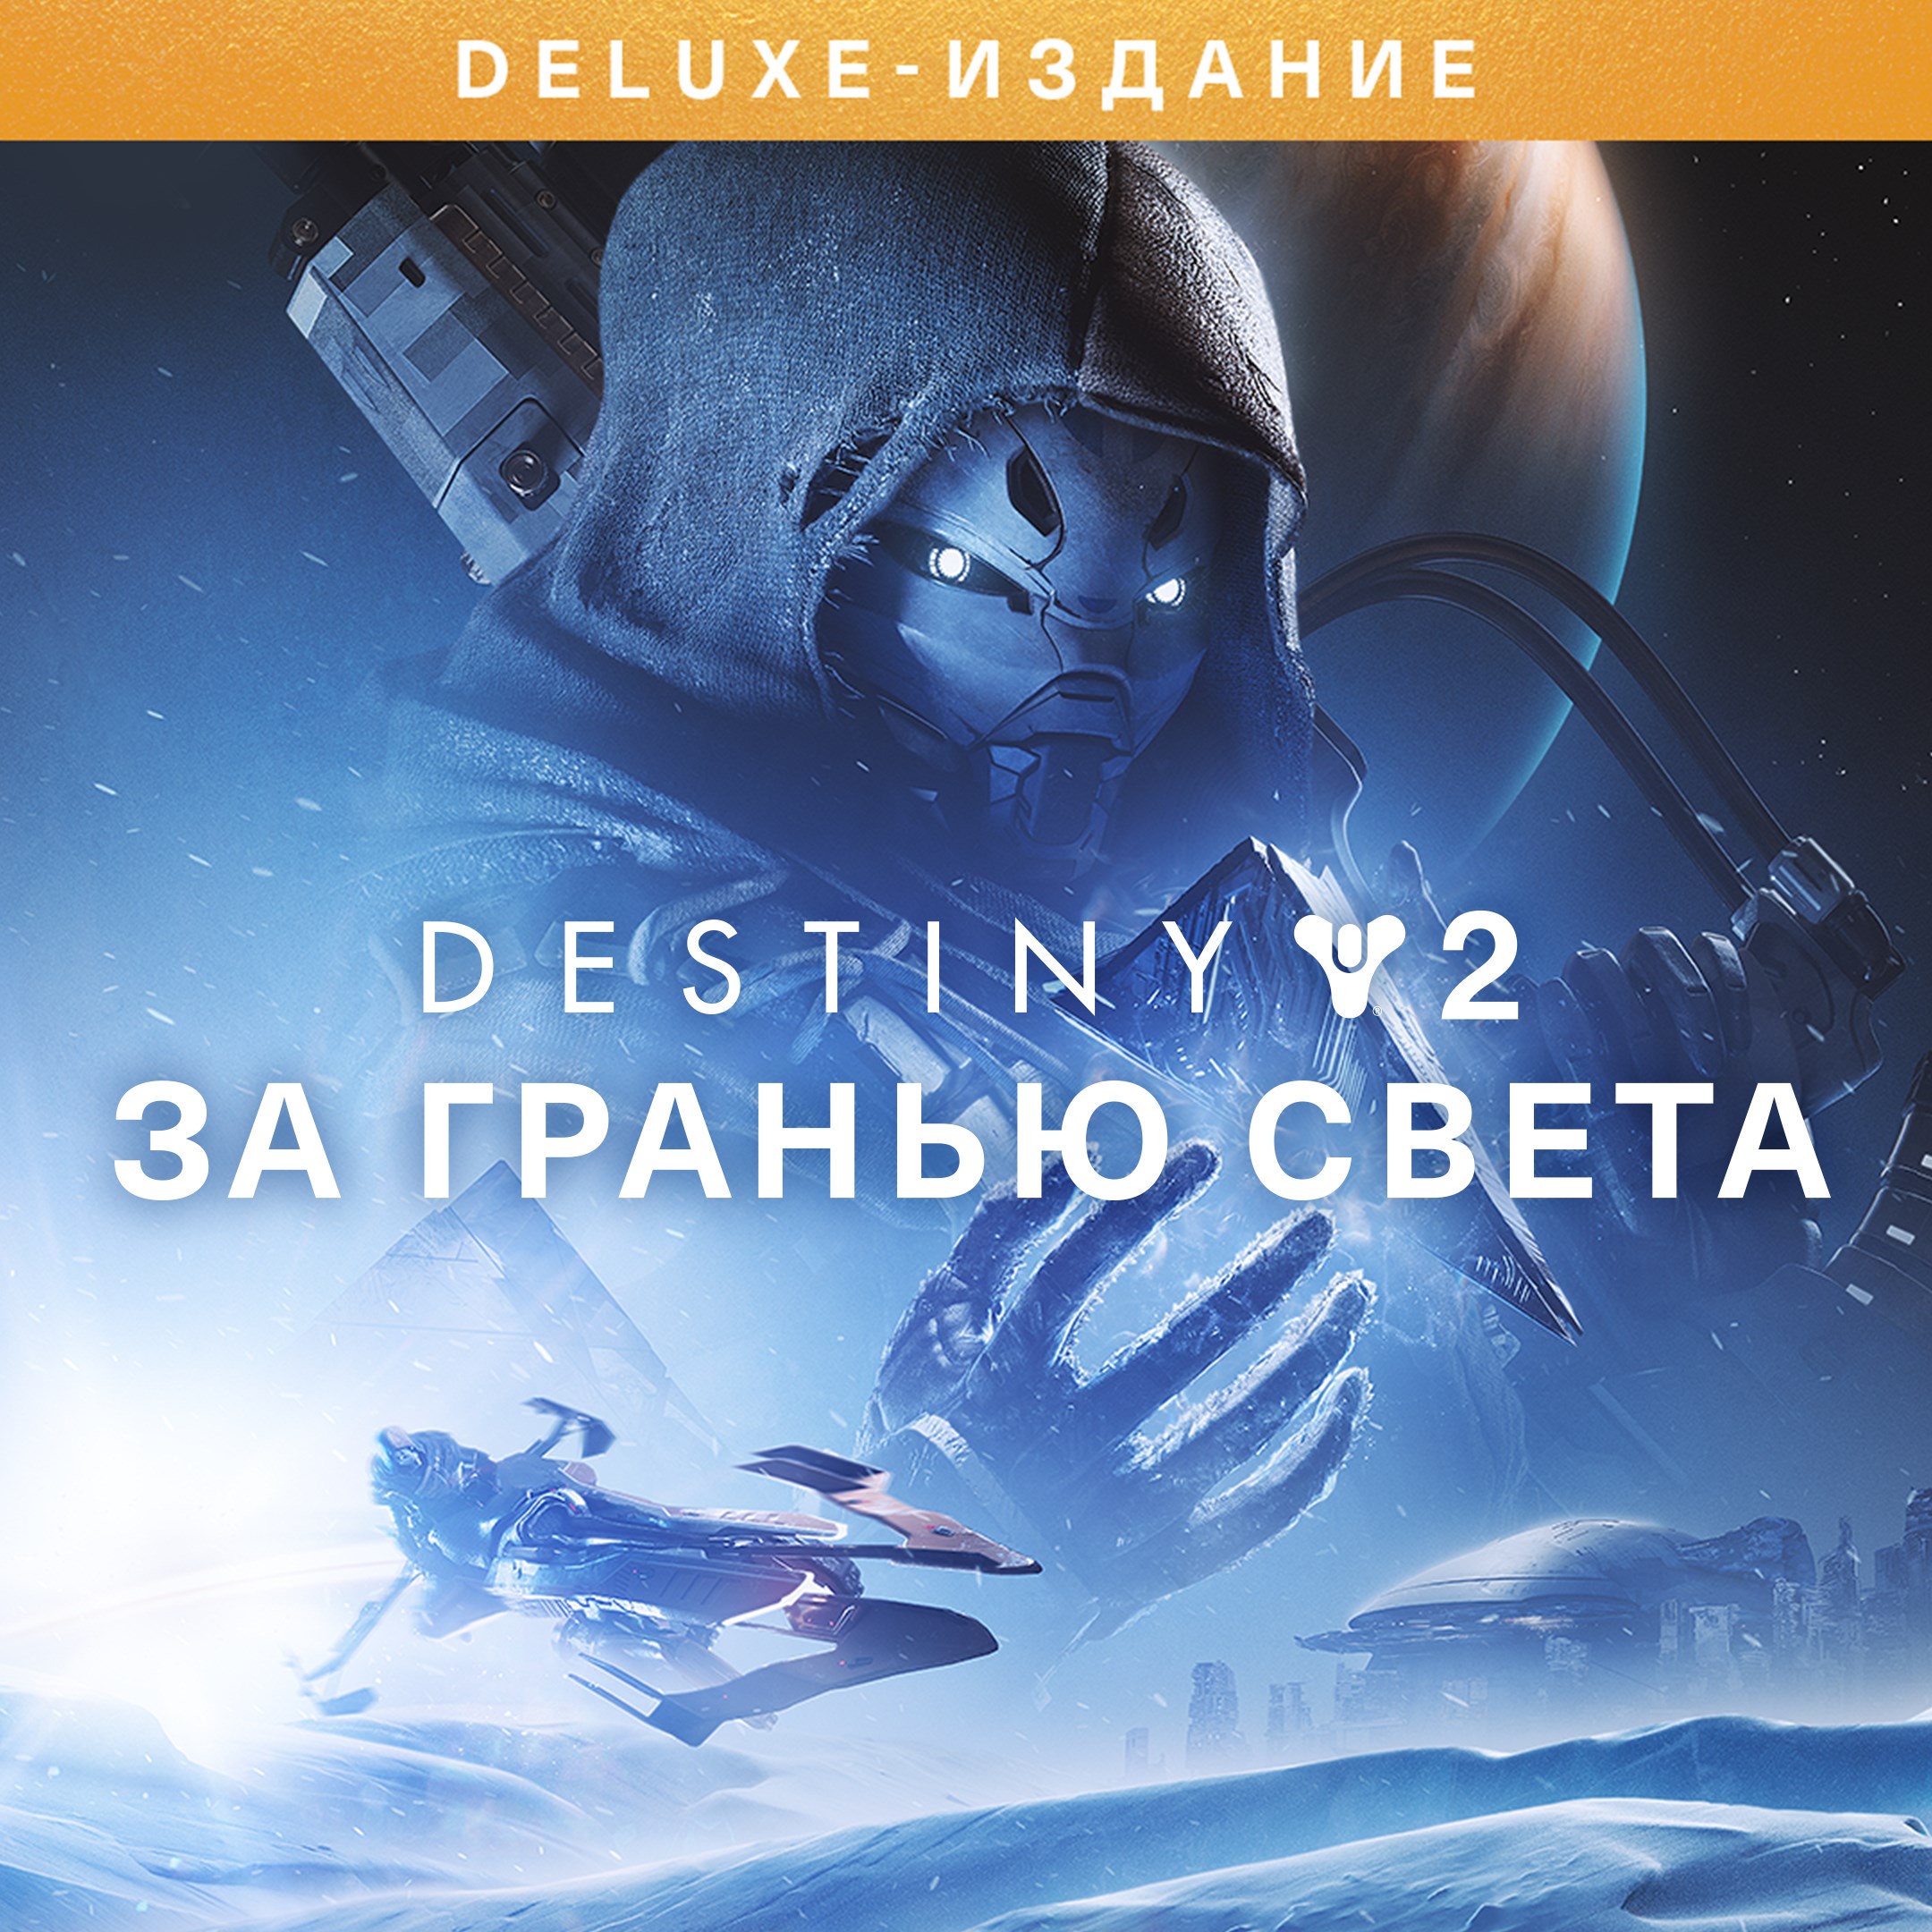 Destiny 2 steam за гранью света фото 73